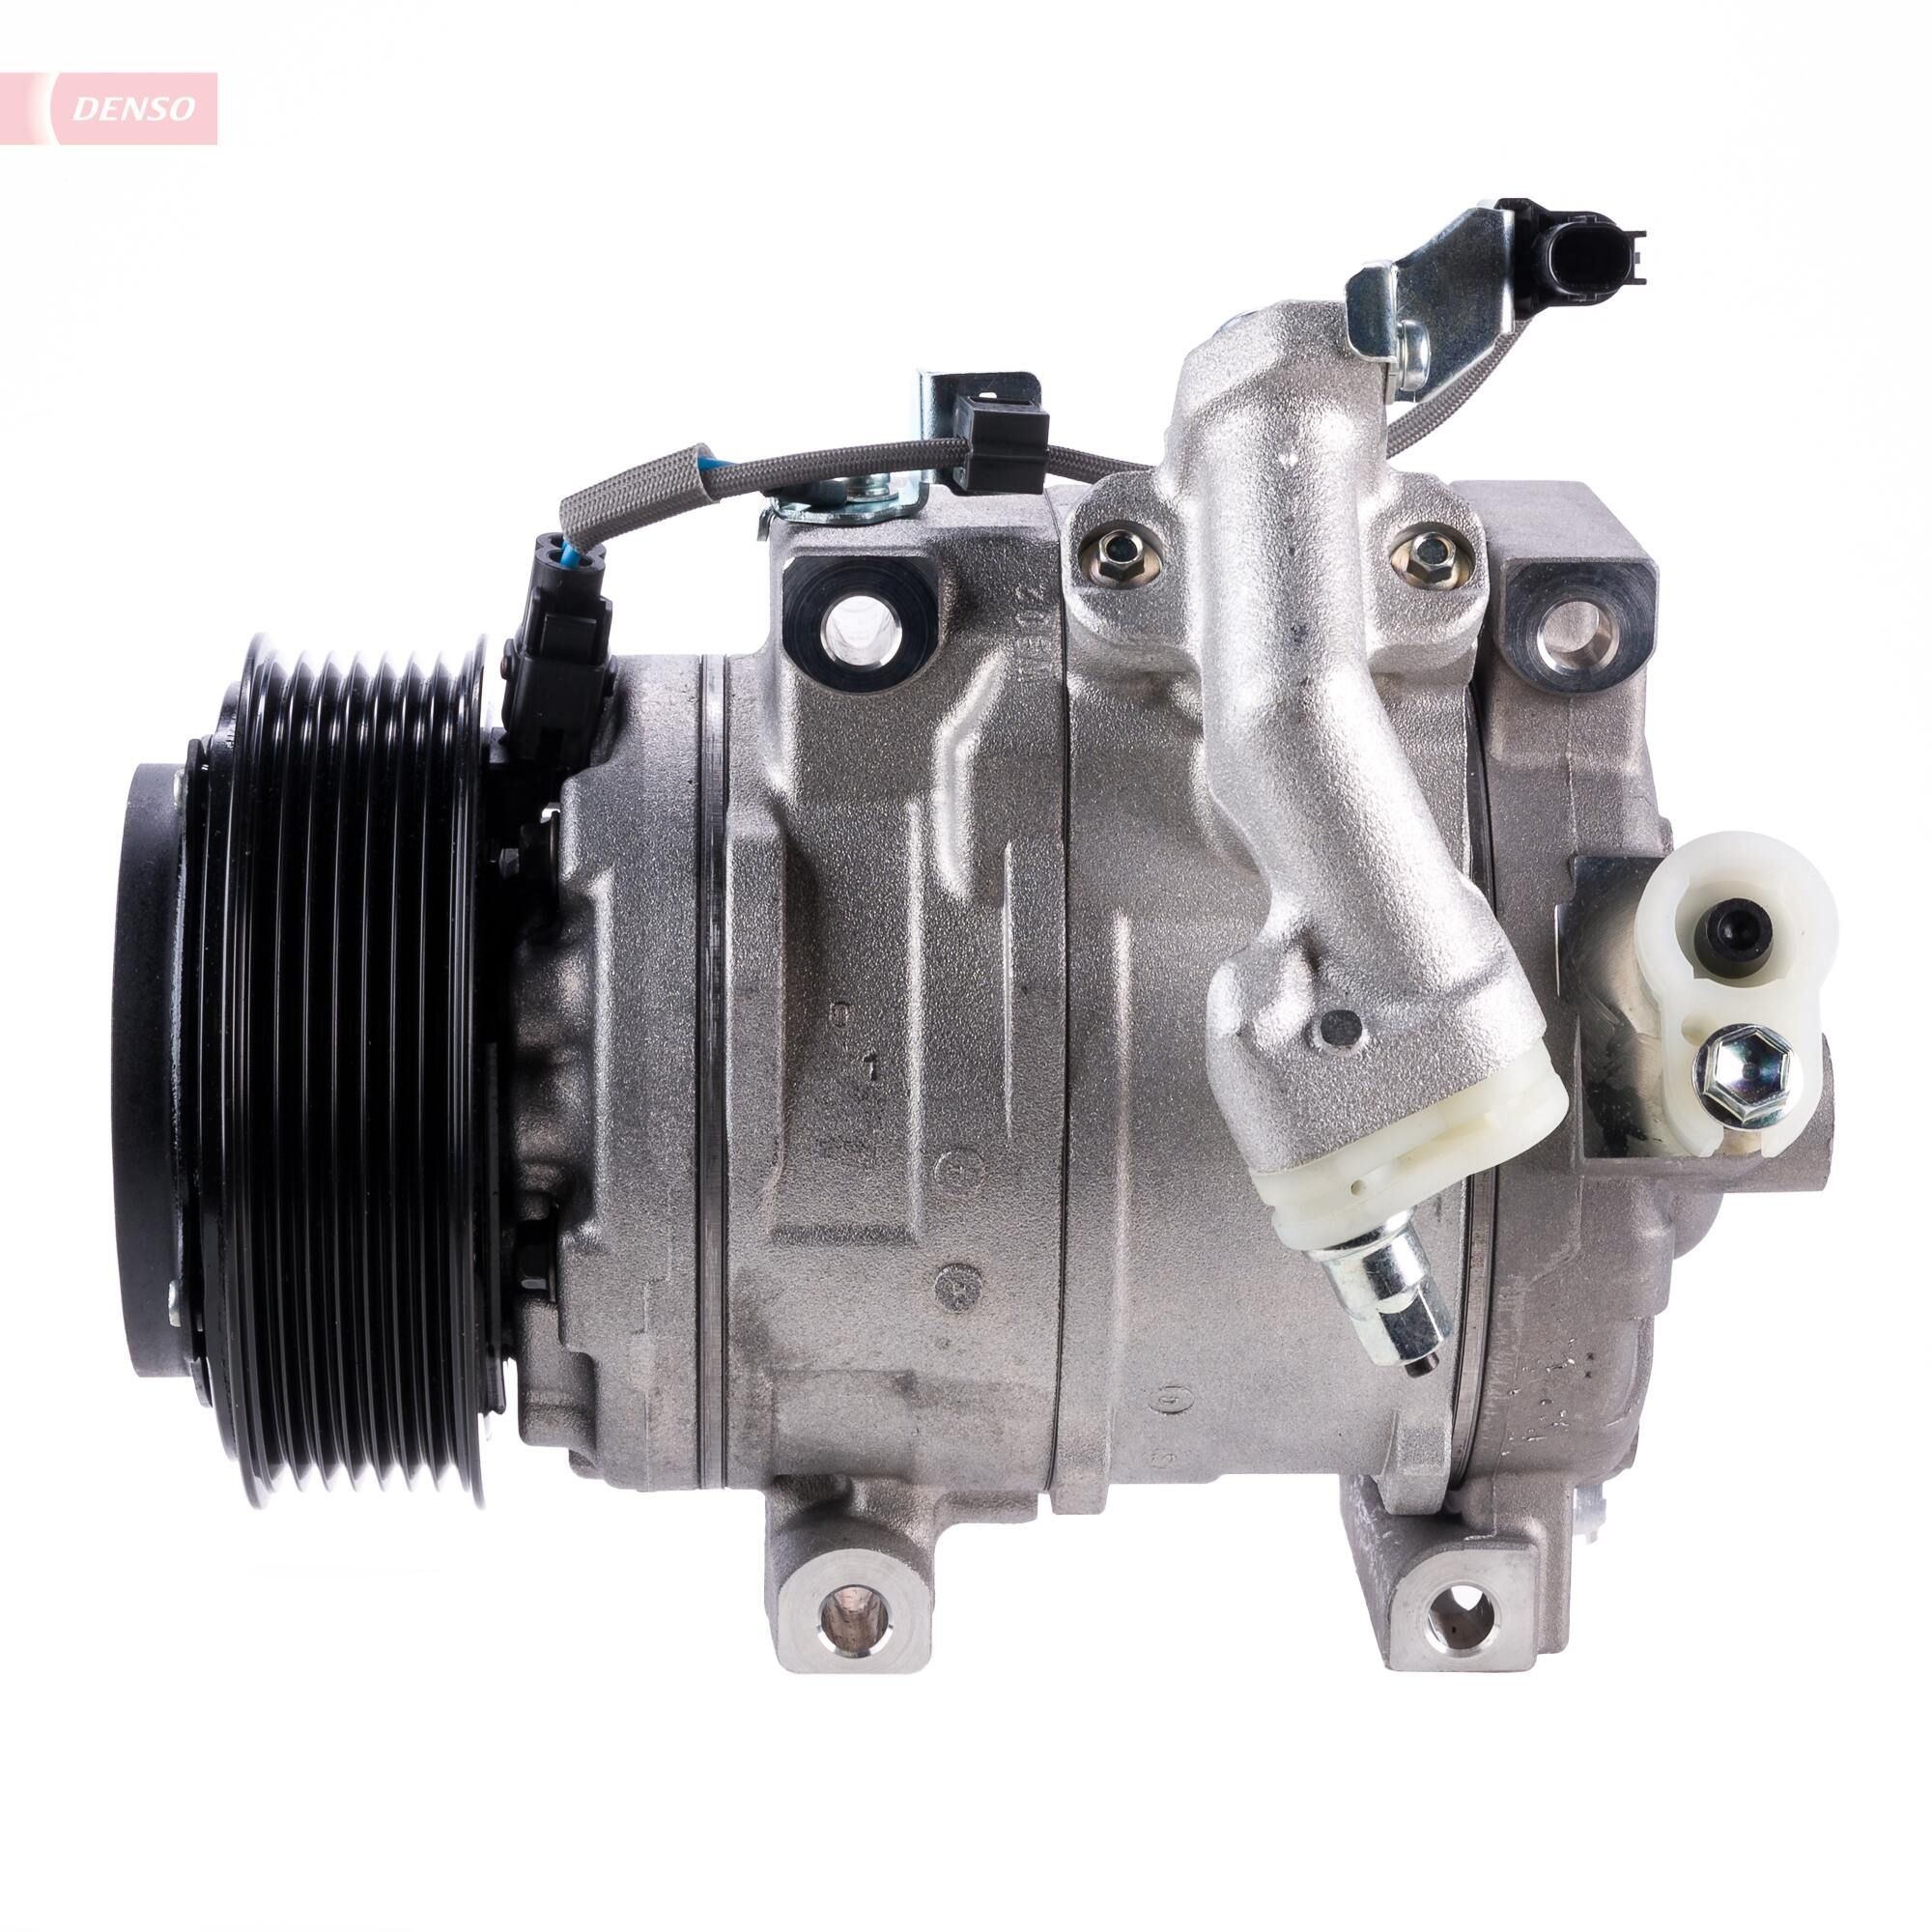 DCP40017 Kältemittelkompressor DENSO - Markenprodukte billig